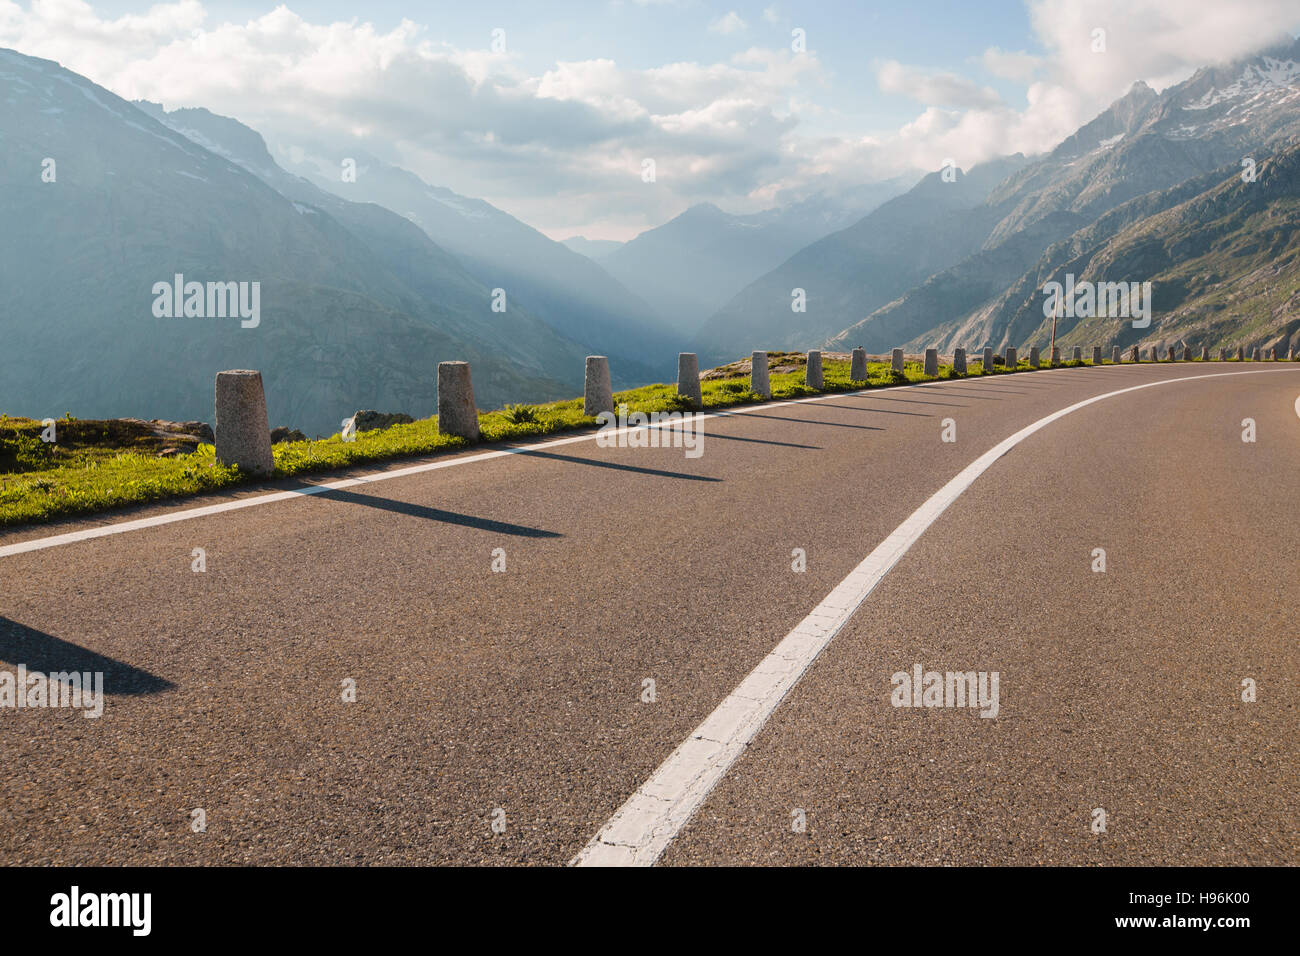 One lane of road, Grimsel pass, Alps, Switzerland Stock Photo